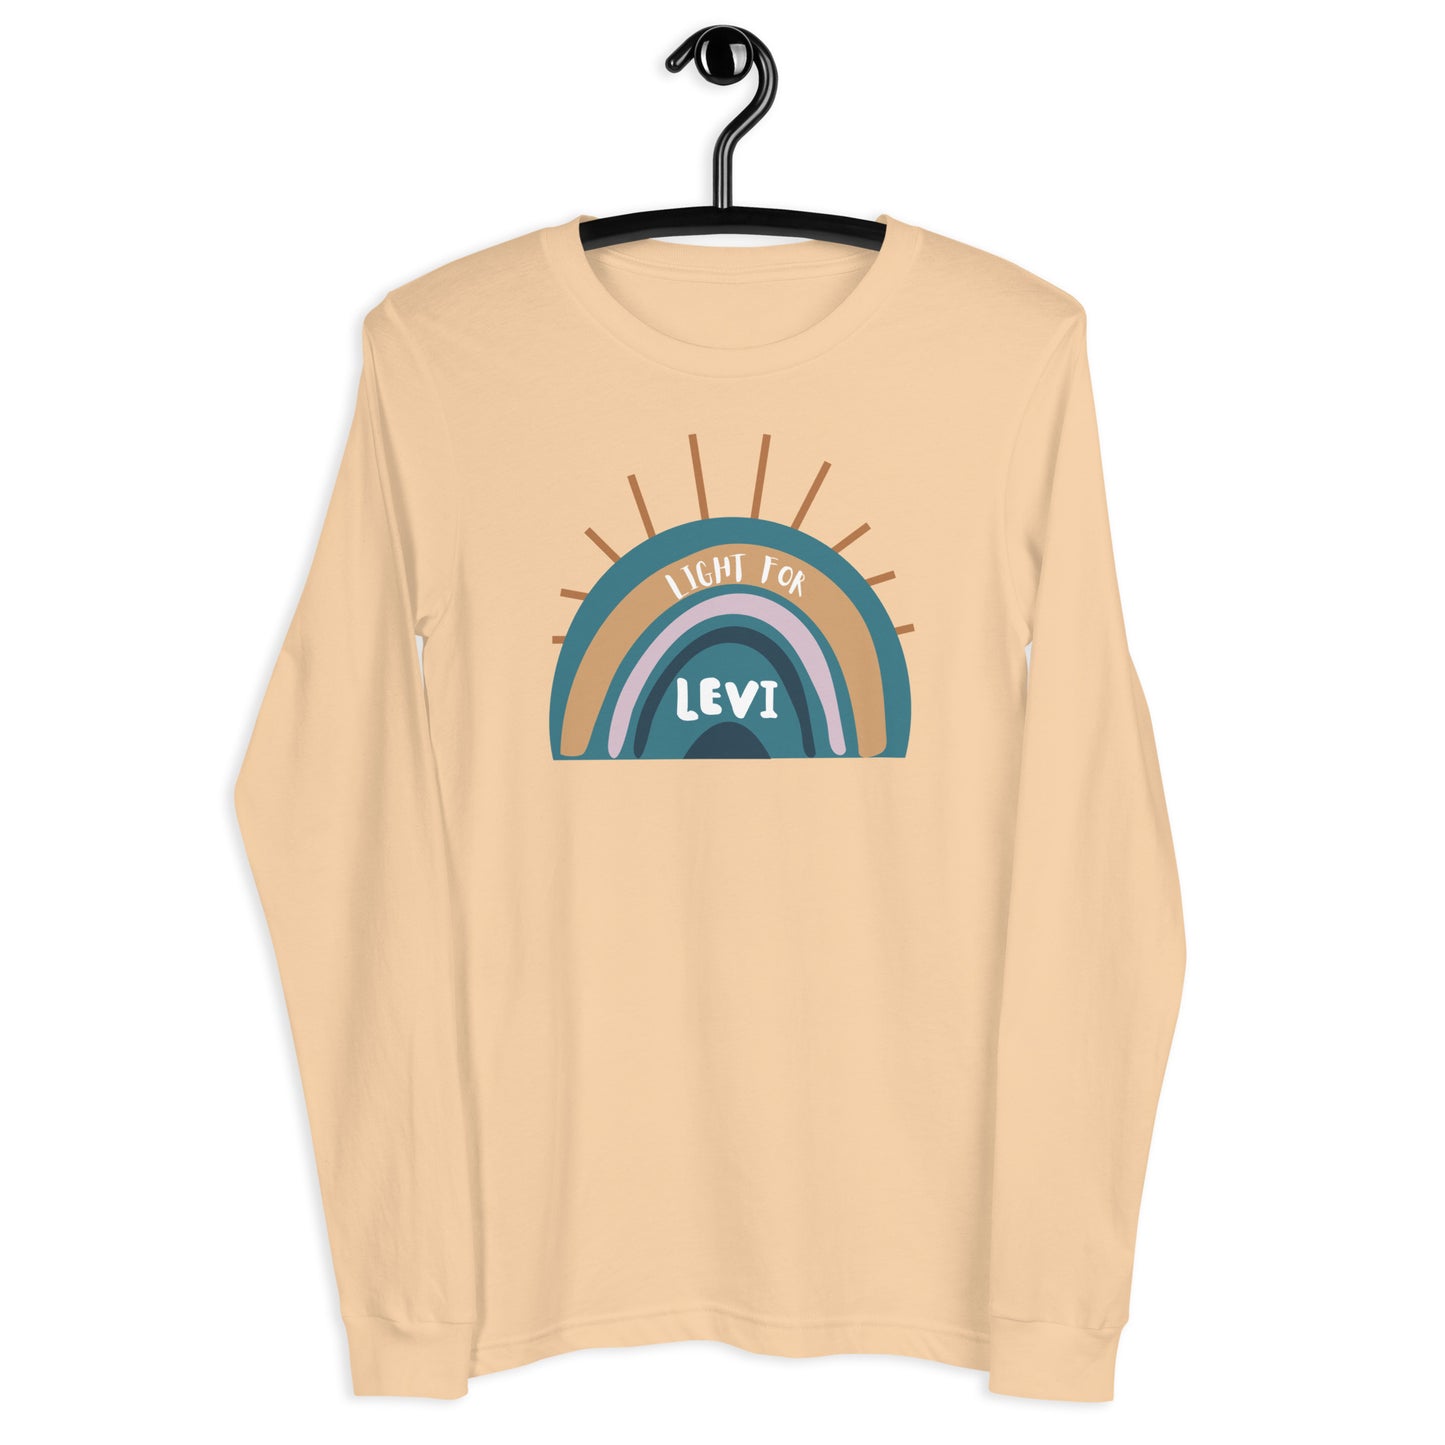 Light For Levi — Adult Unisex Long Sleeve Tee